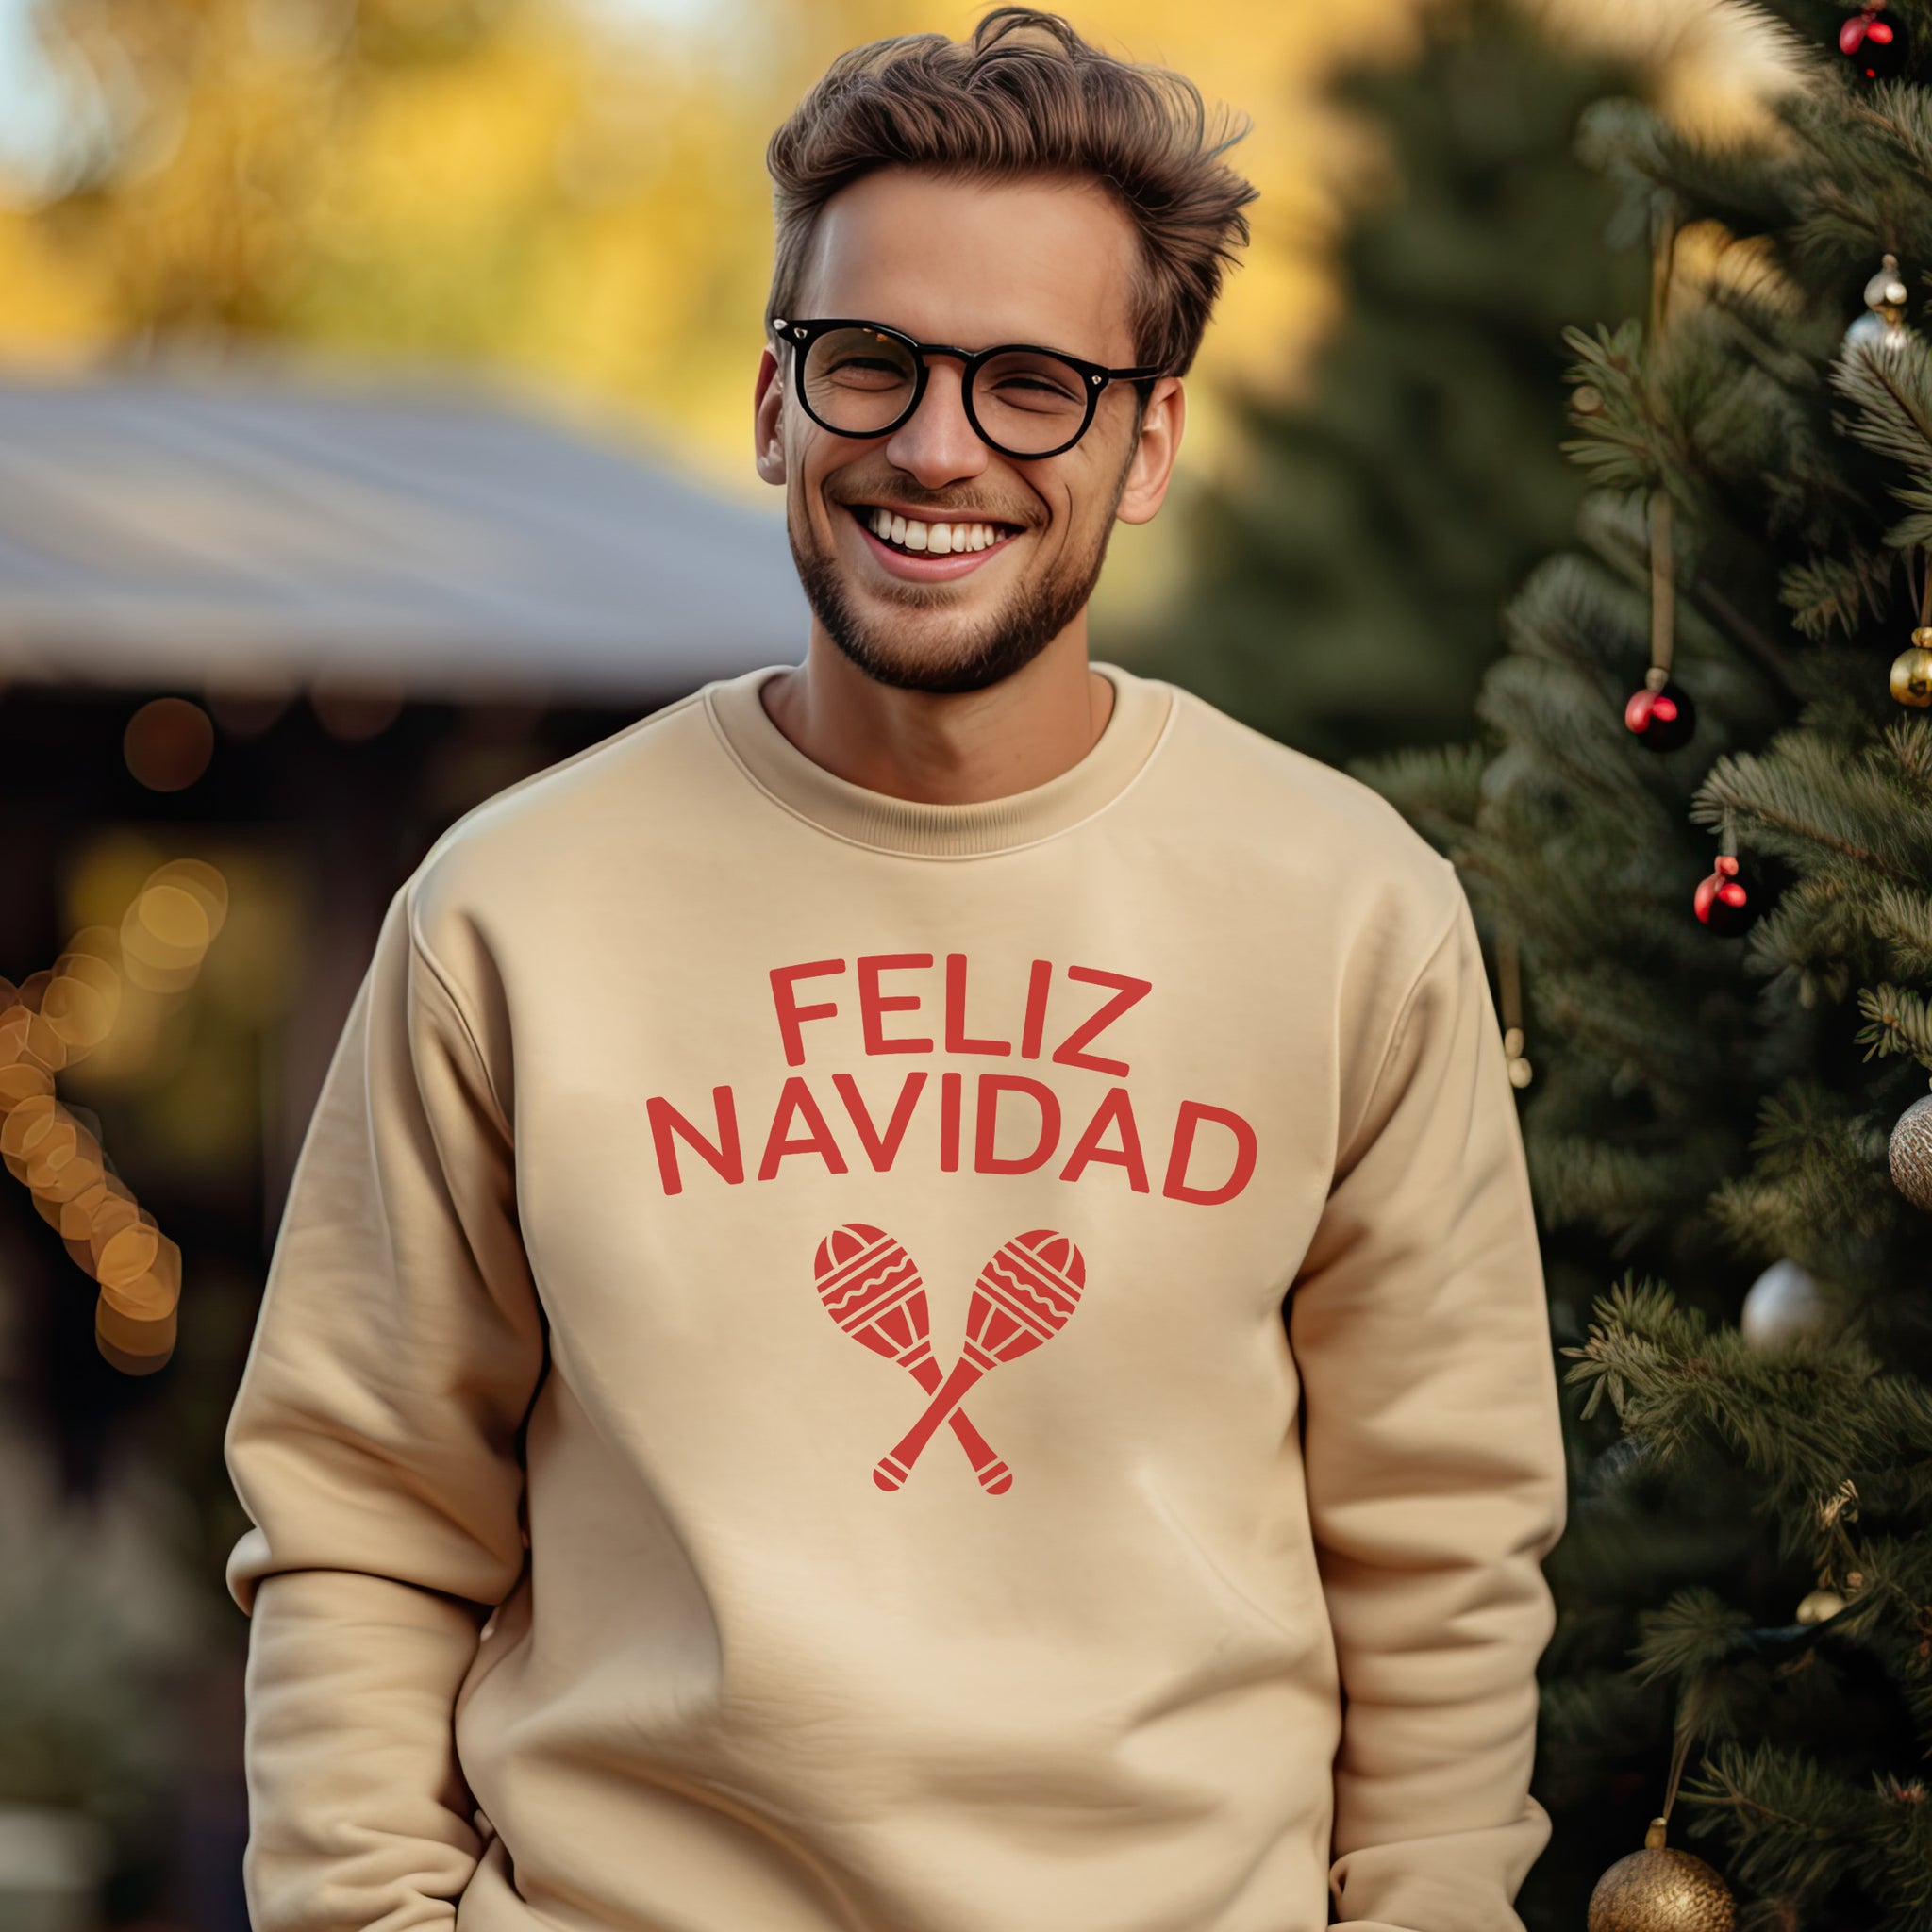 Feliz Navidad Christmas Sweater - Christmas Jumper Sweatshirt - All Sizes